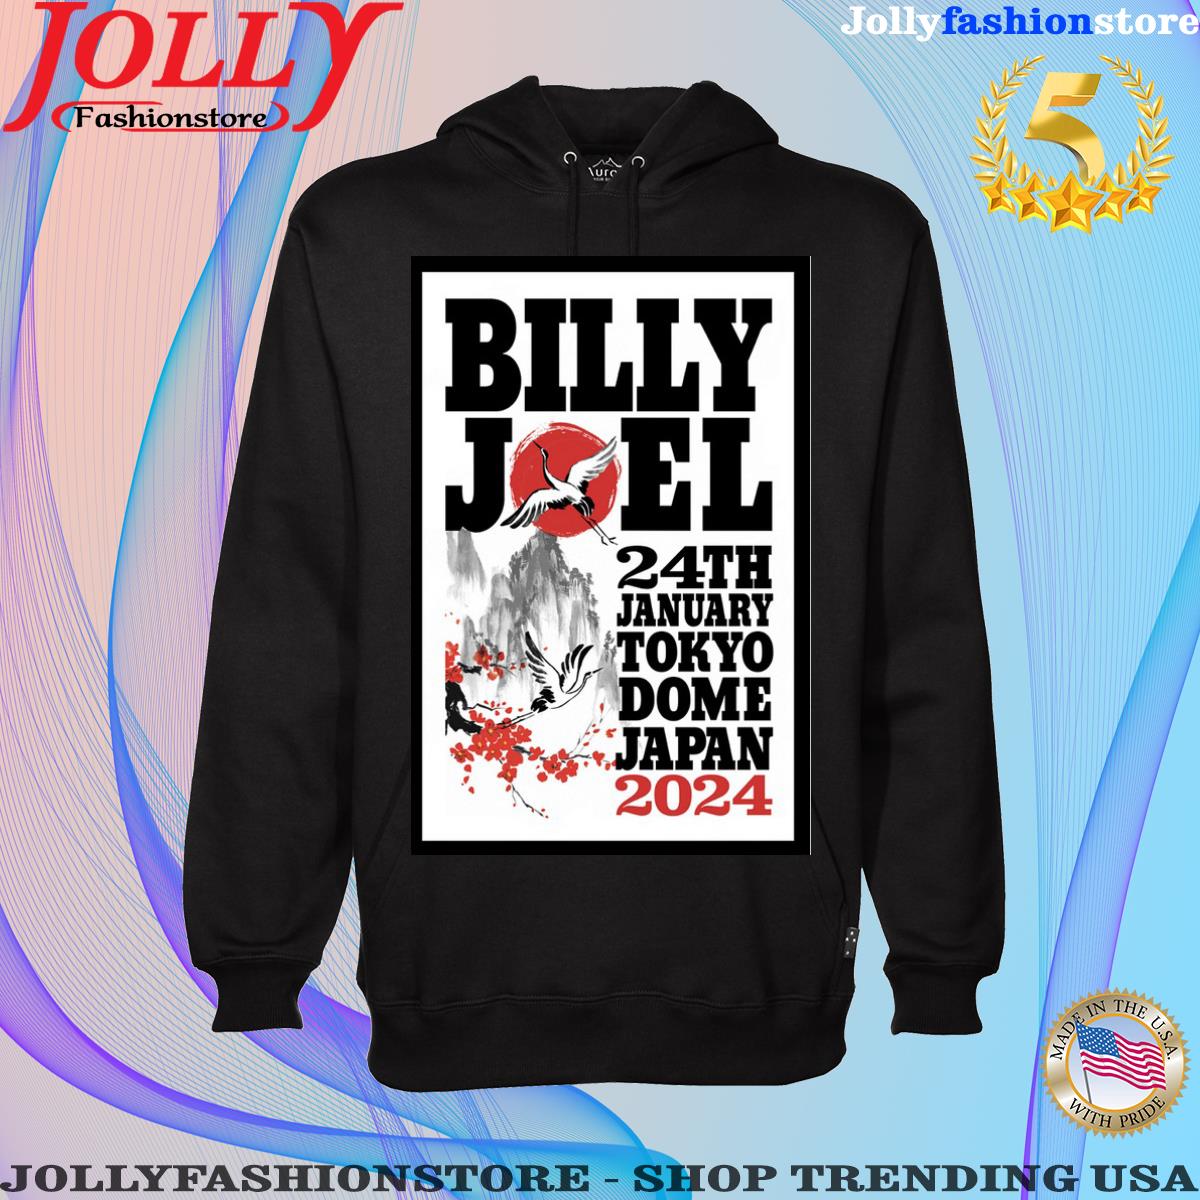 Billy Joe 2024 Tokyo Dome, Japan Poster T-Shirts, sweatshirt, hoodie, v ...